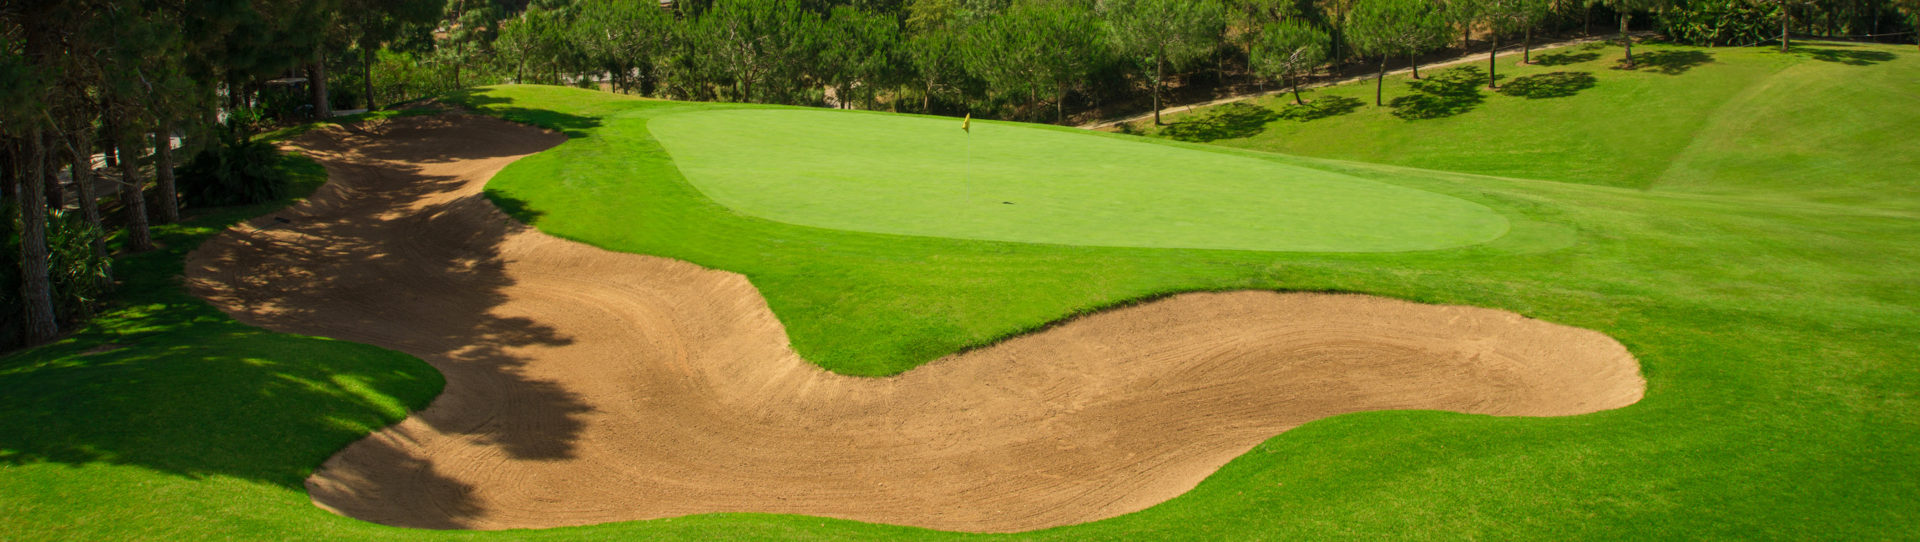 Spain golf courses - Chaparral Golf Course  - Photo 1